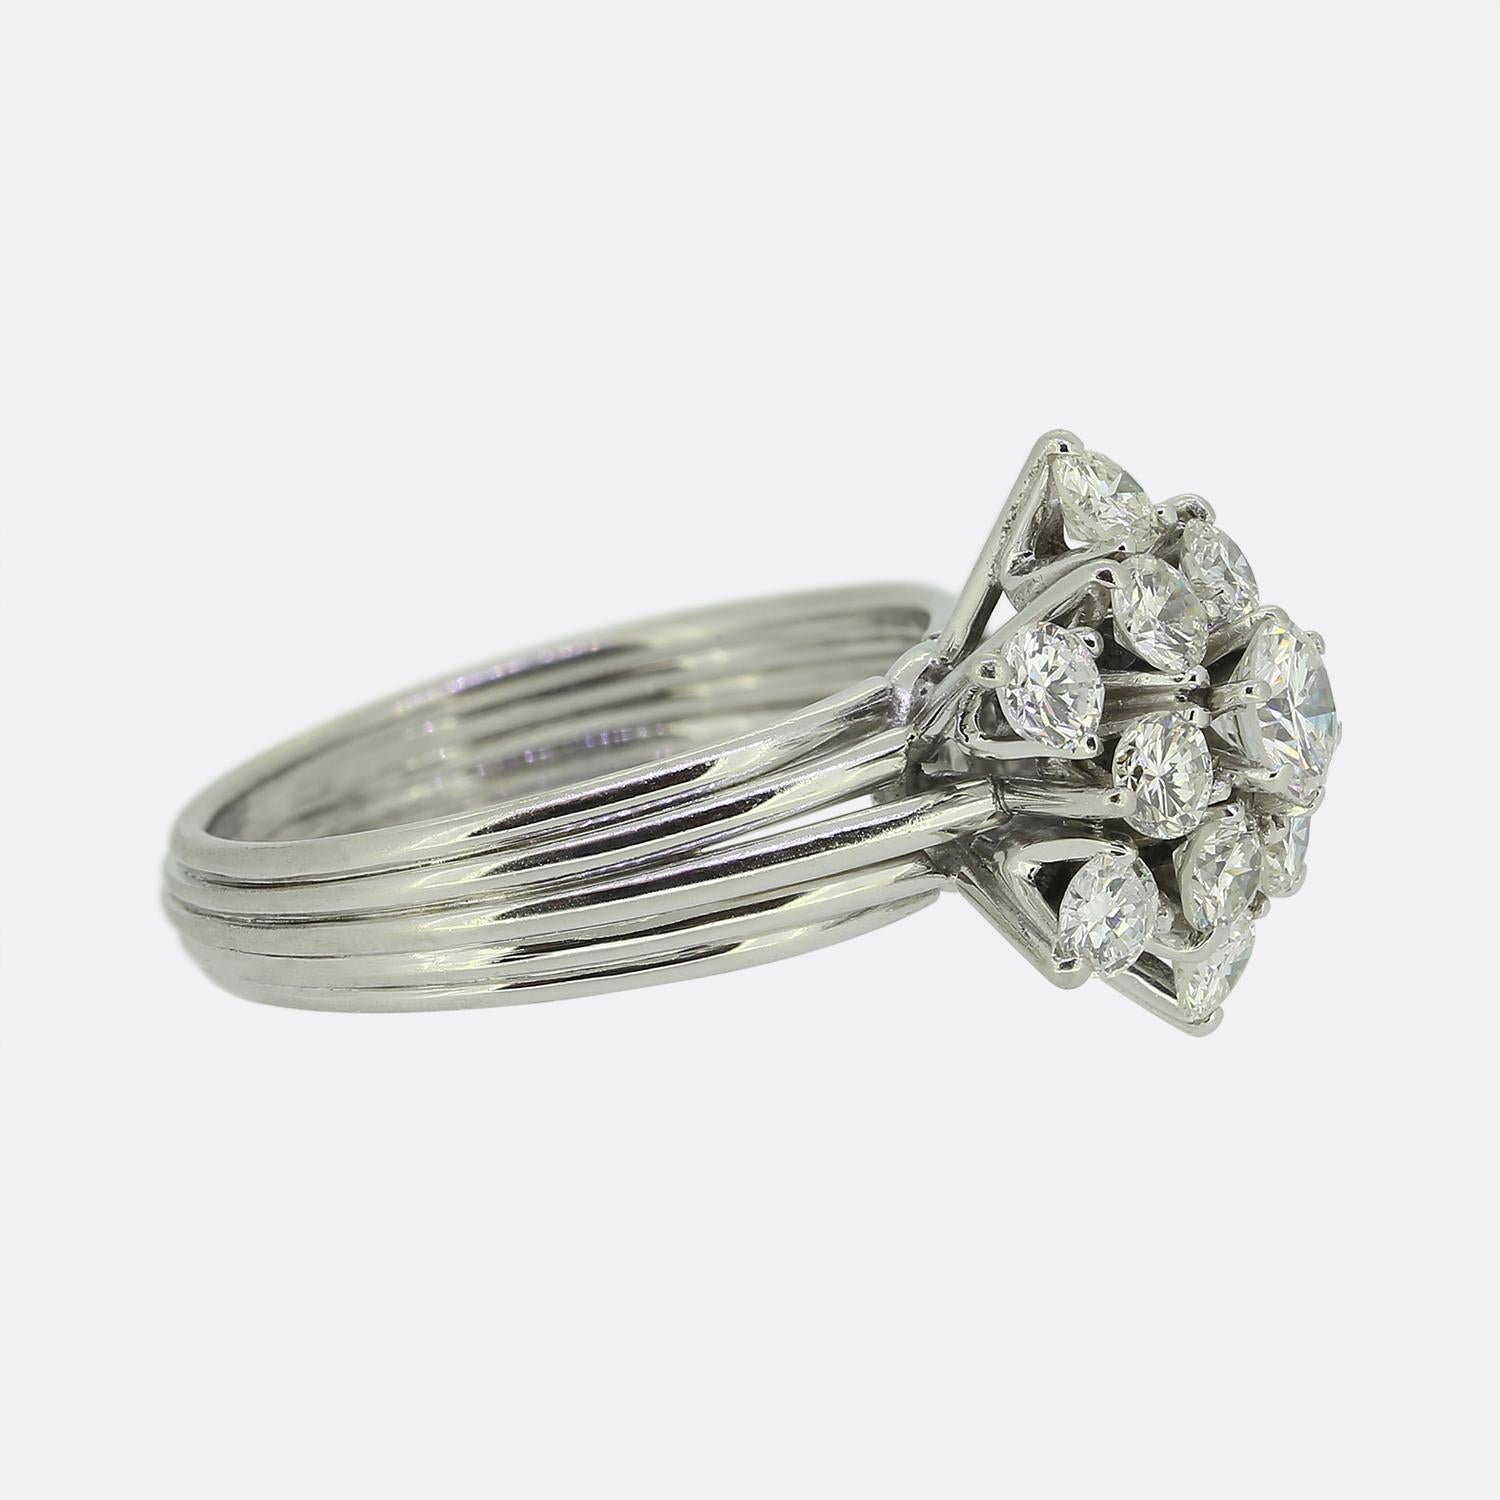 Brilliant Cut 1.06 Carat Diamond Cluster Ring For Sale